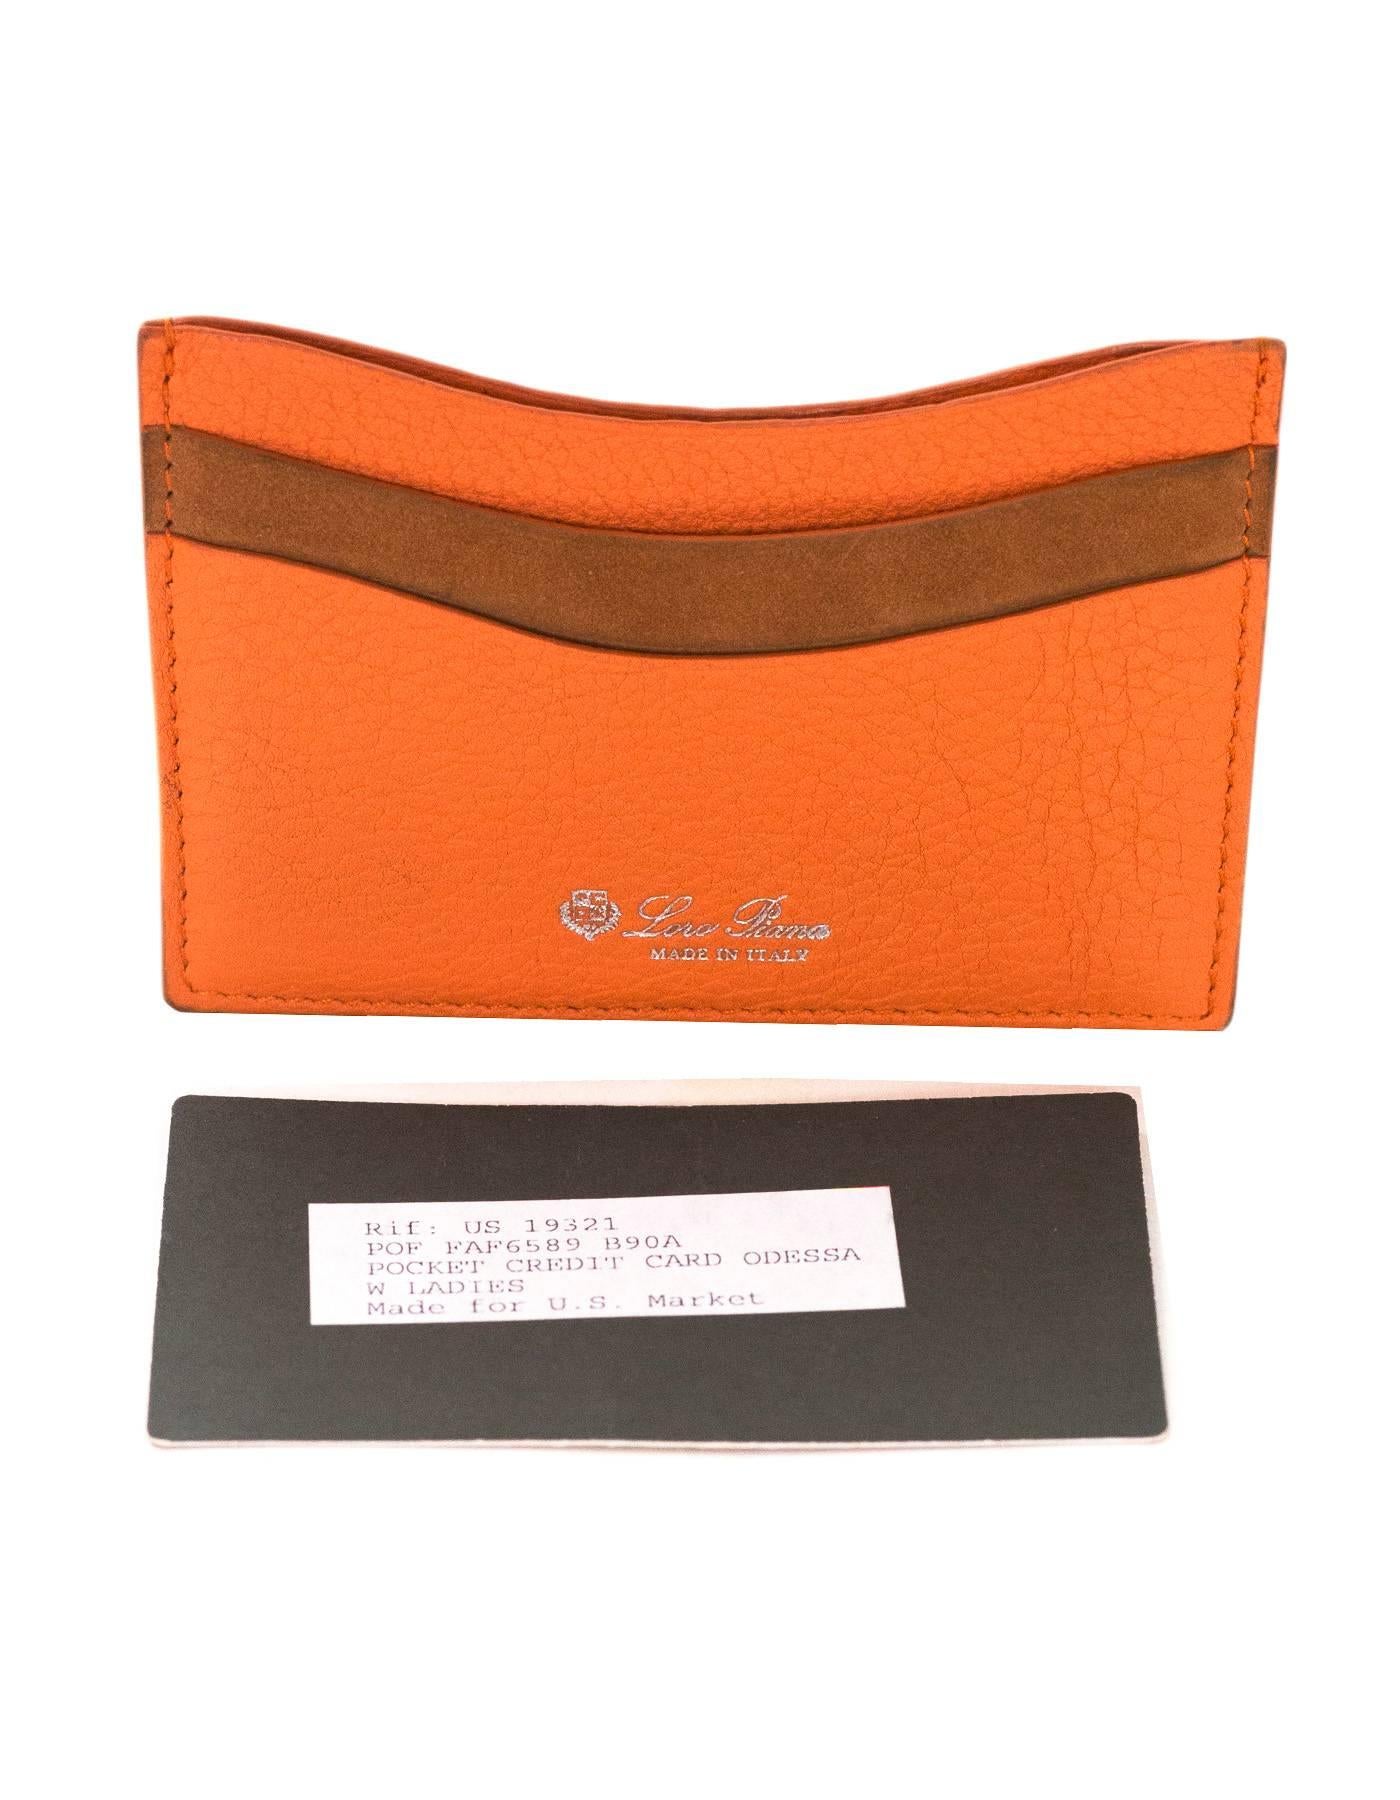 Loro Piana Orange Leather & Suede Card Holder rt. $300 1